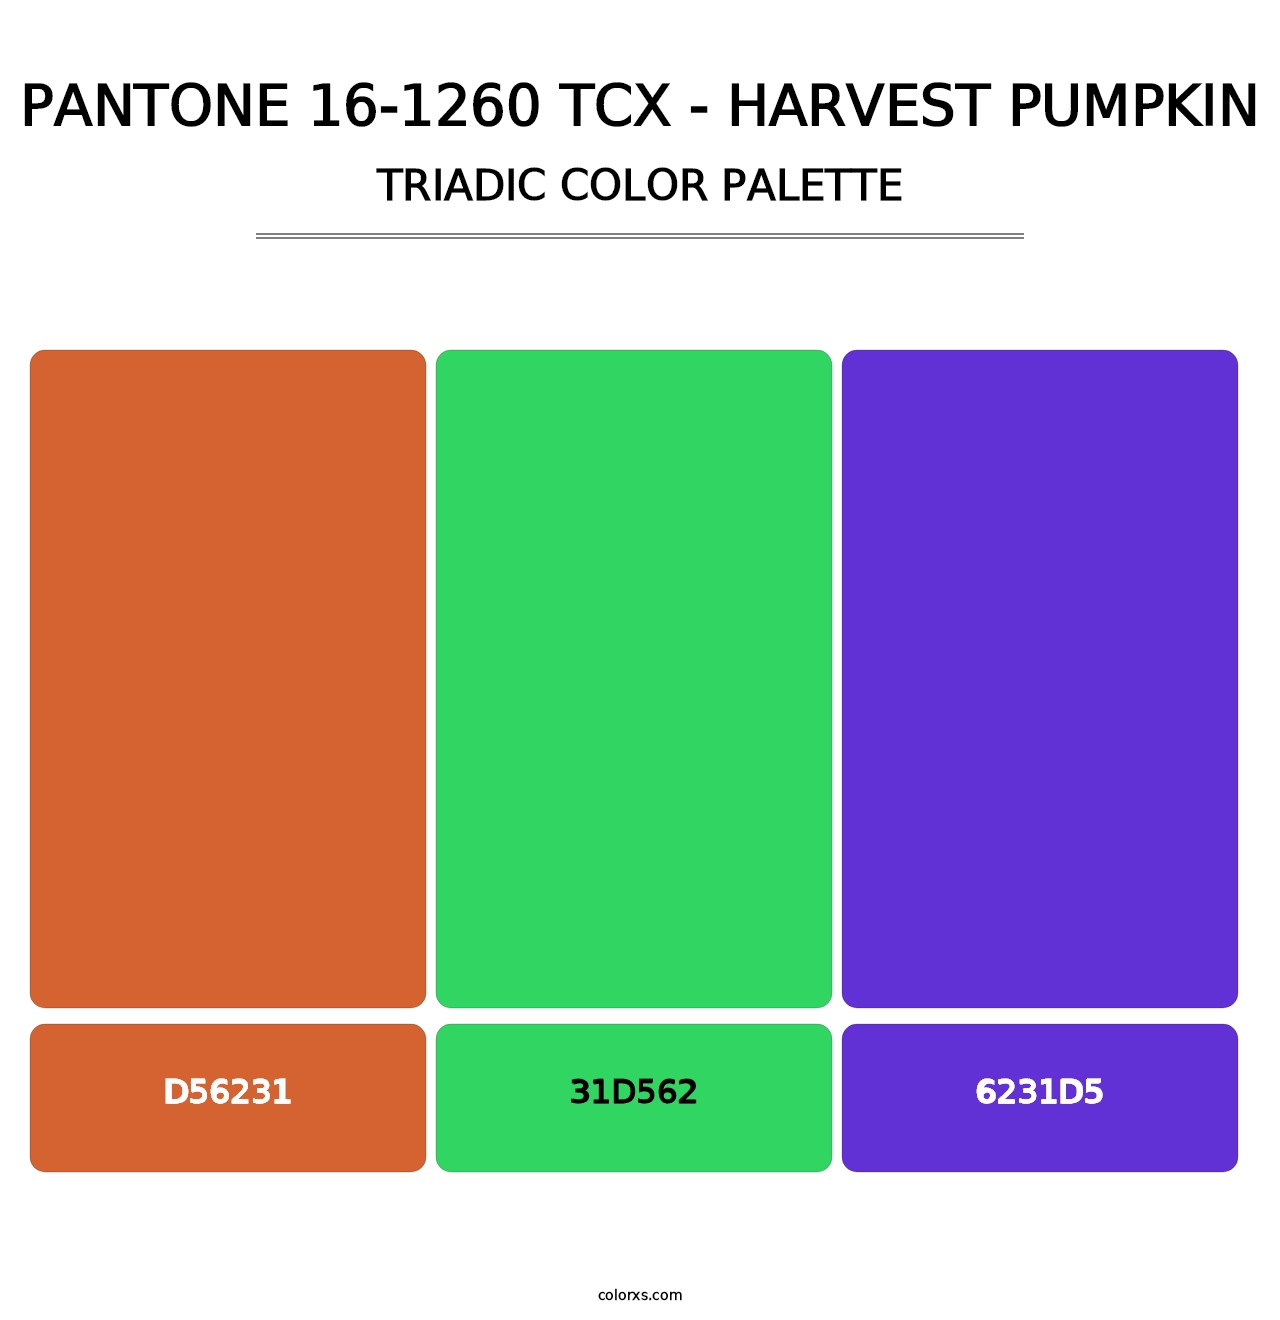 PANTONE 16-1260 TCX - Harvest Pumpkin - Triadic Color Palette